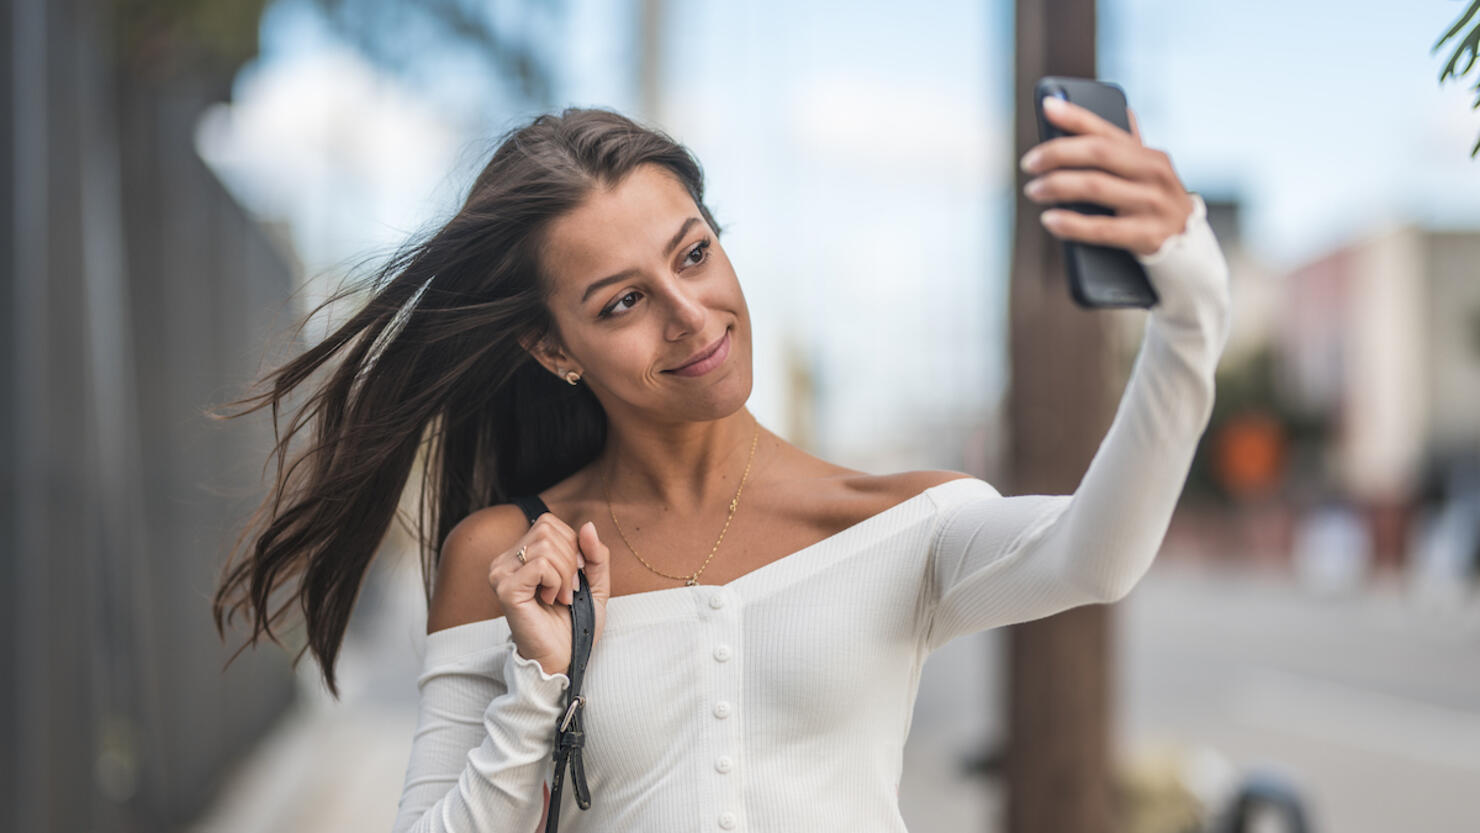 Smiling woman taking selfie on smart phone in city